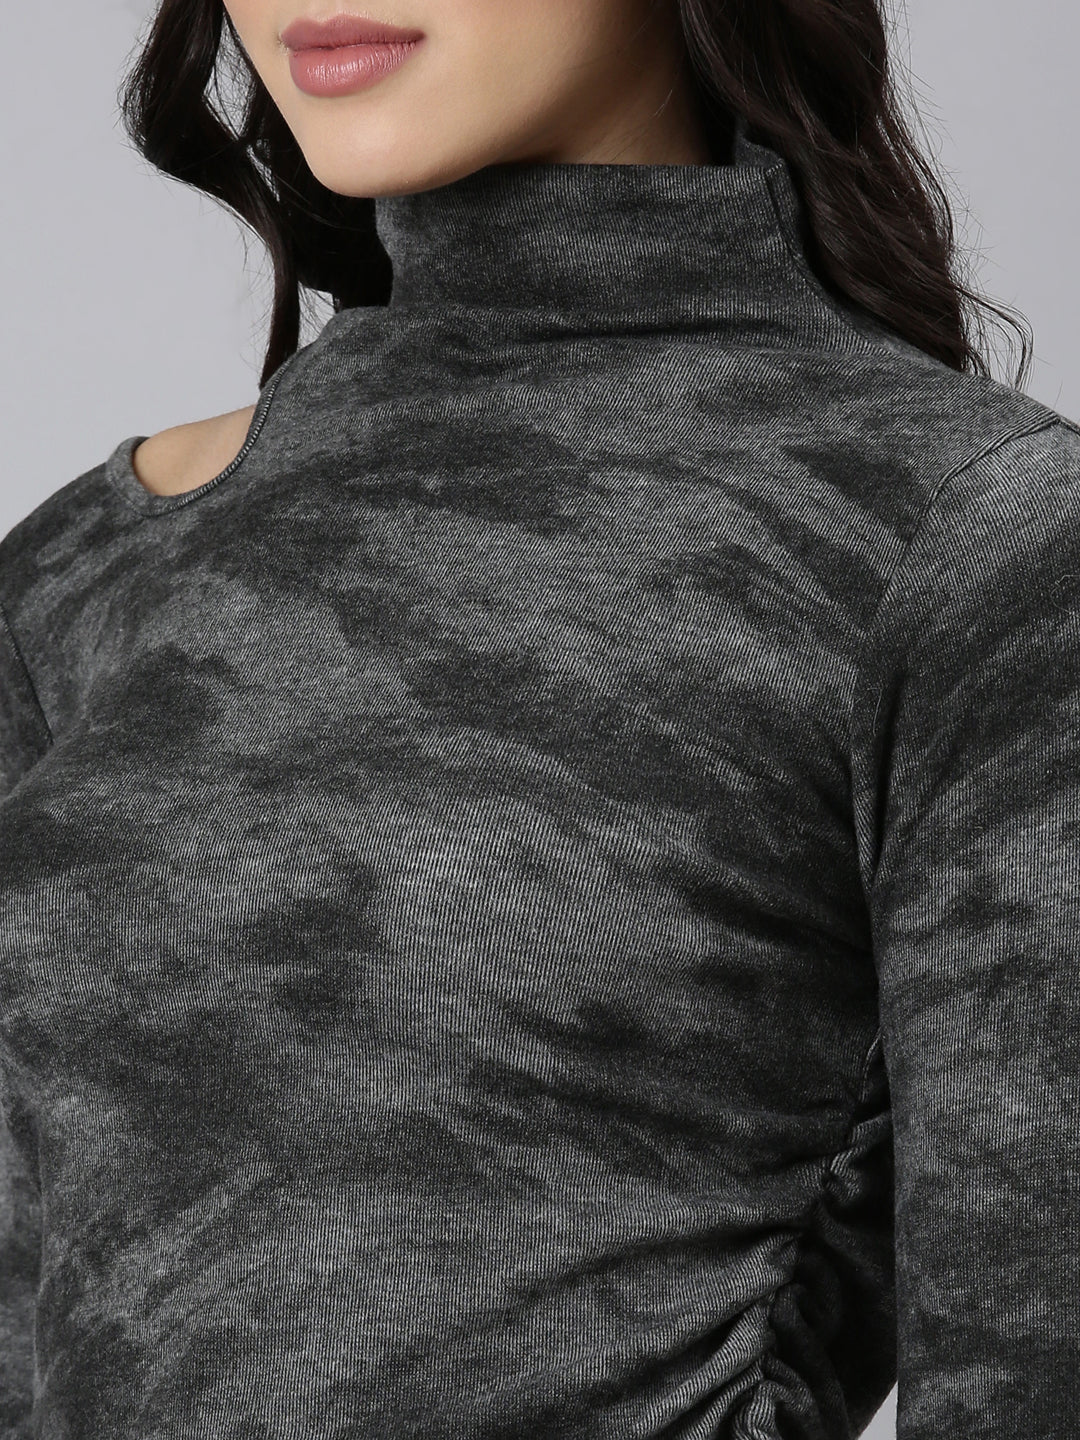 Women Abstract Grey Top